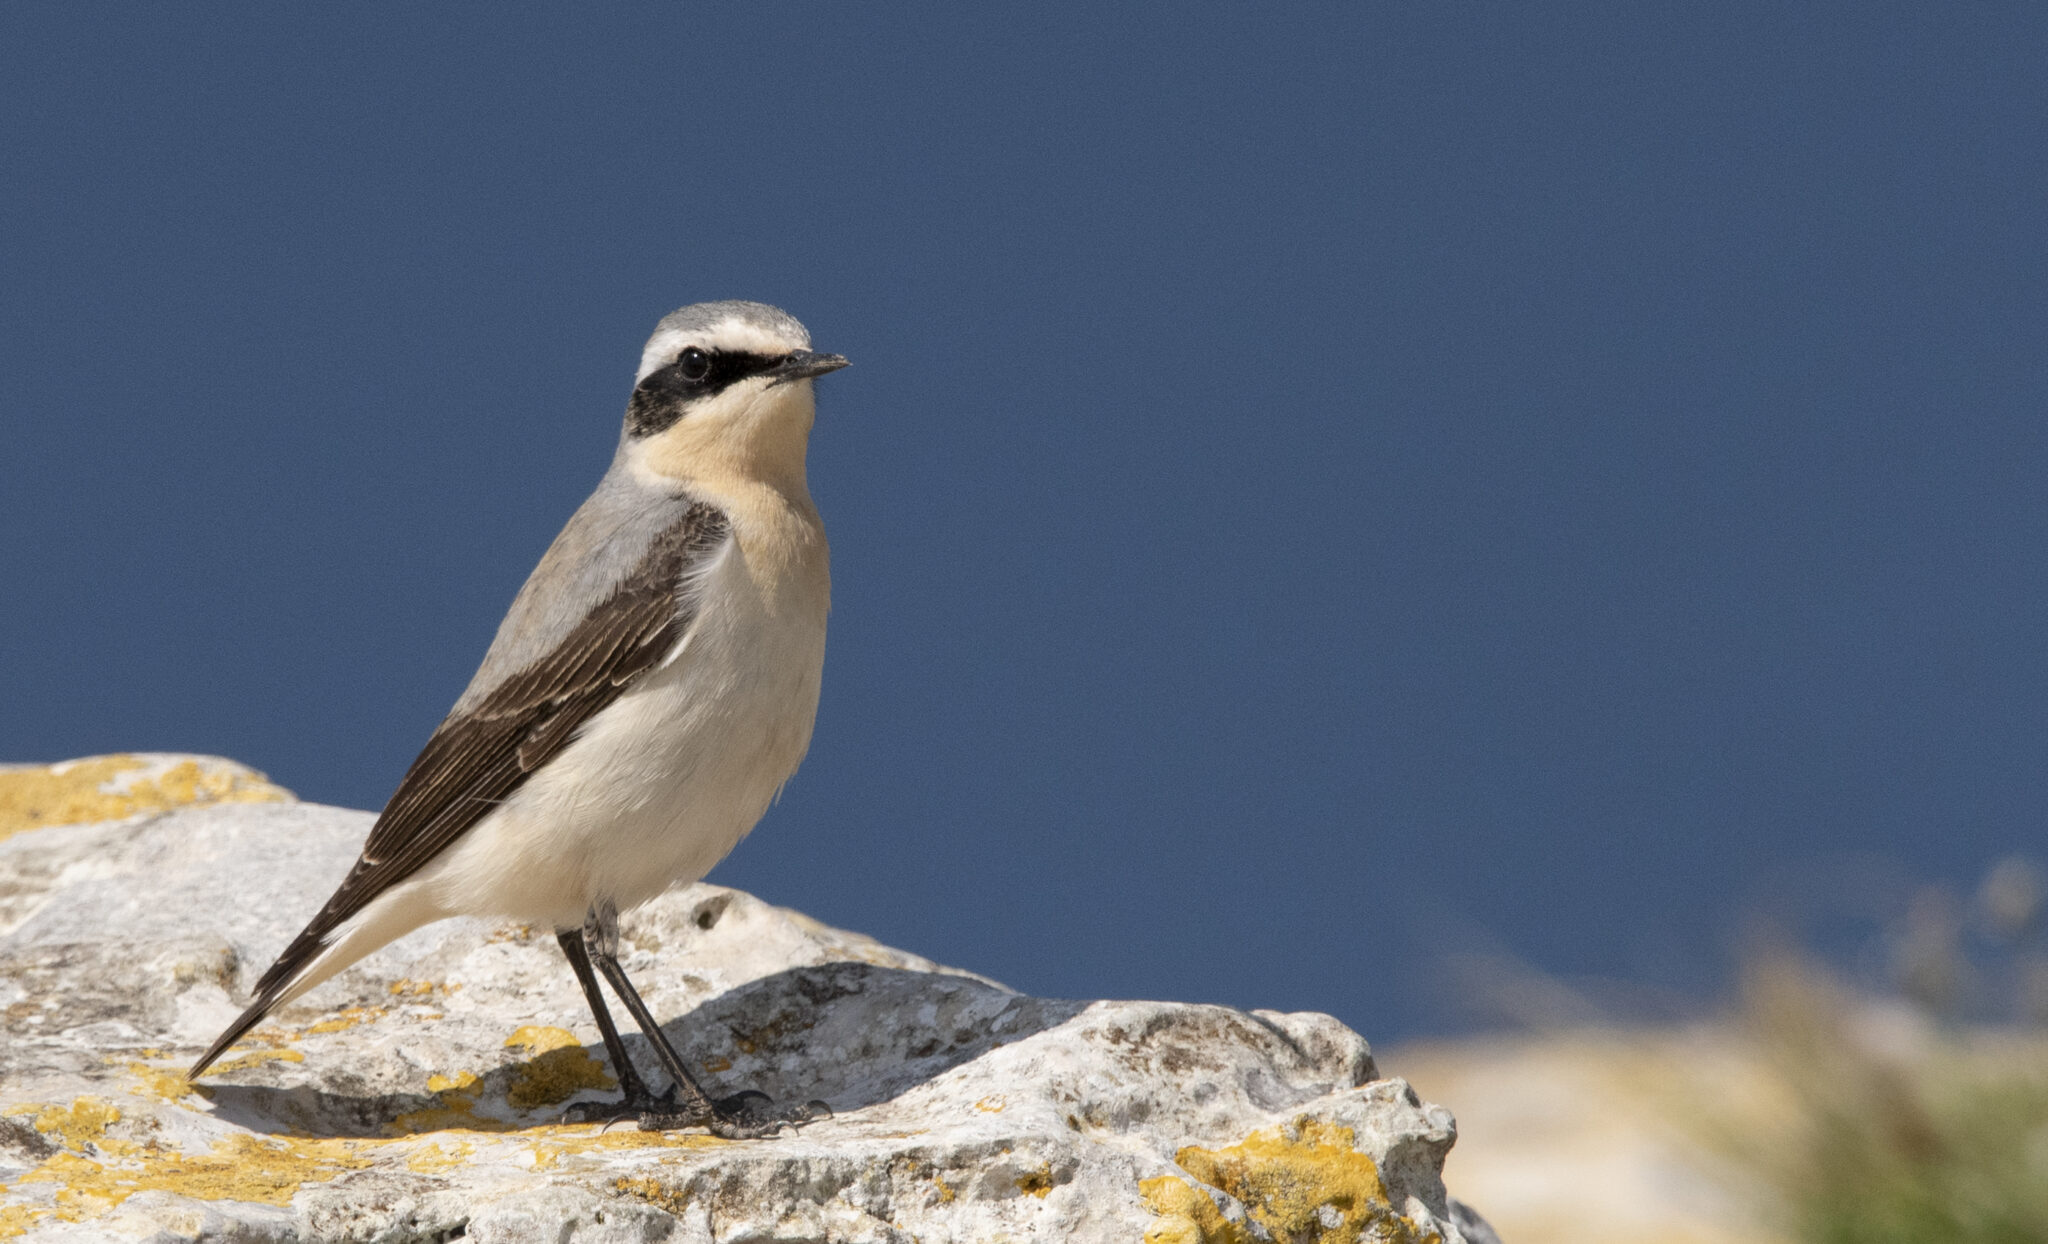 Birds of Malta photo competition - CLOSED | BirdLife Malta